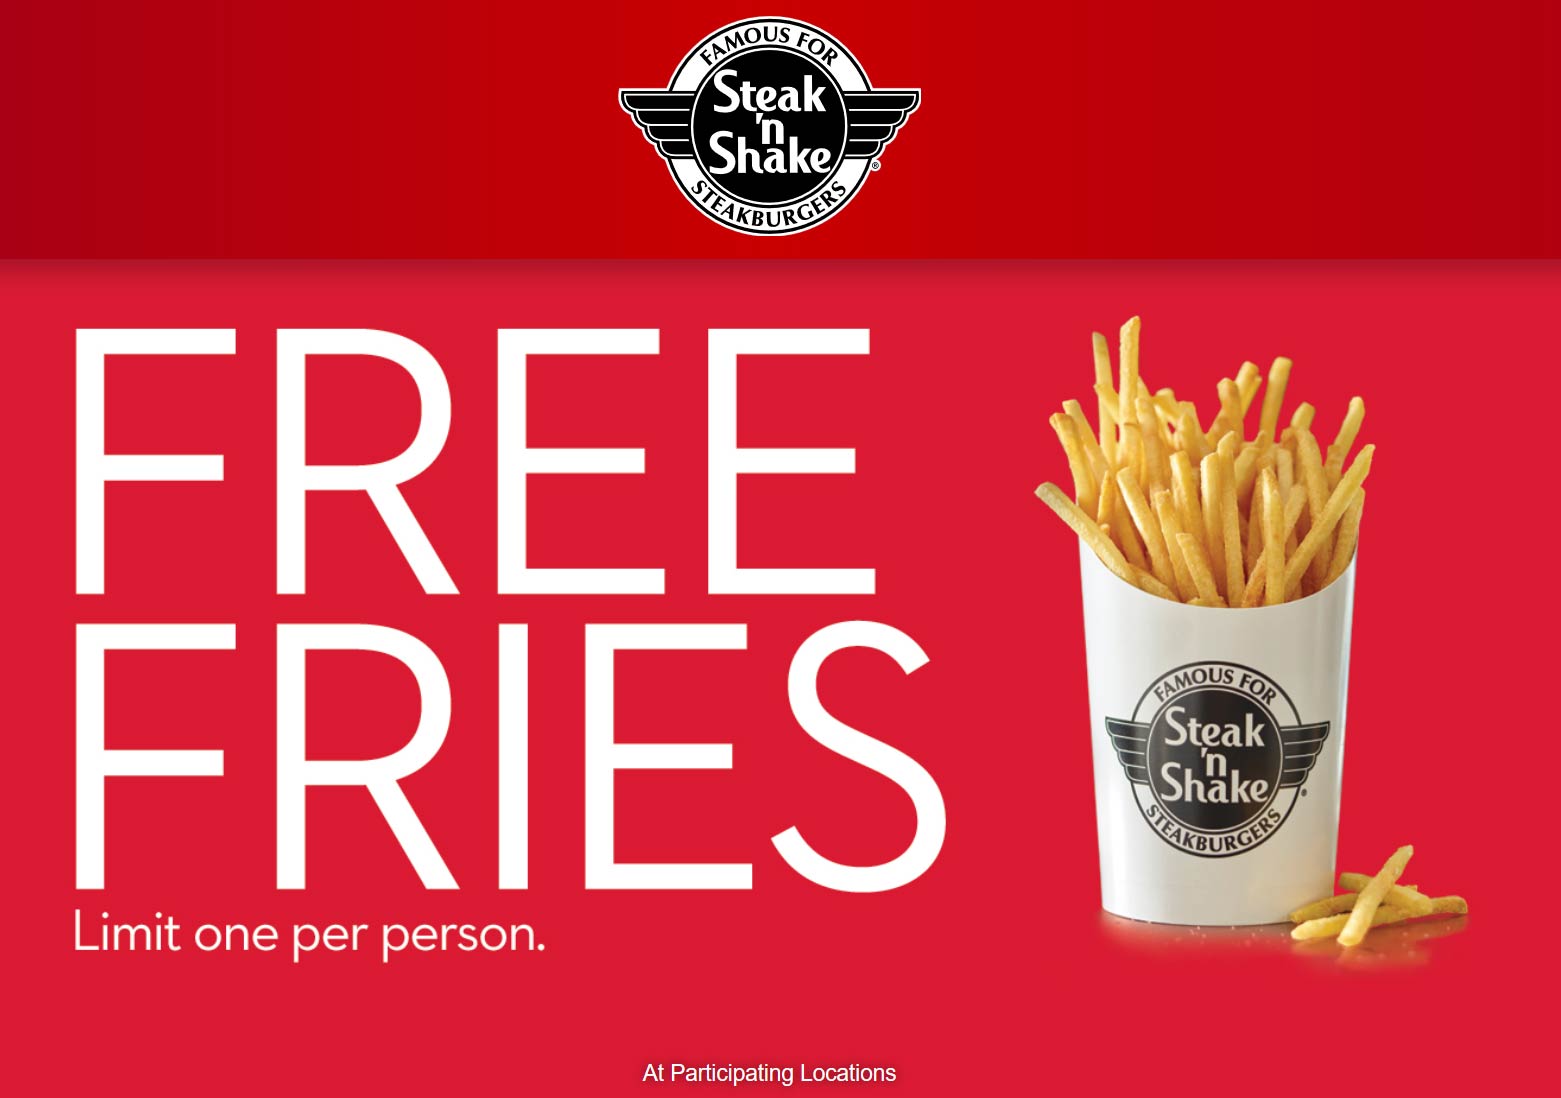 Free french fries at Steak n Shake restaurants steaknshake The